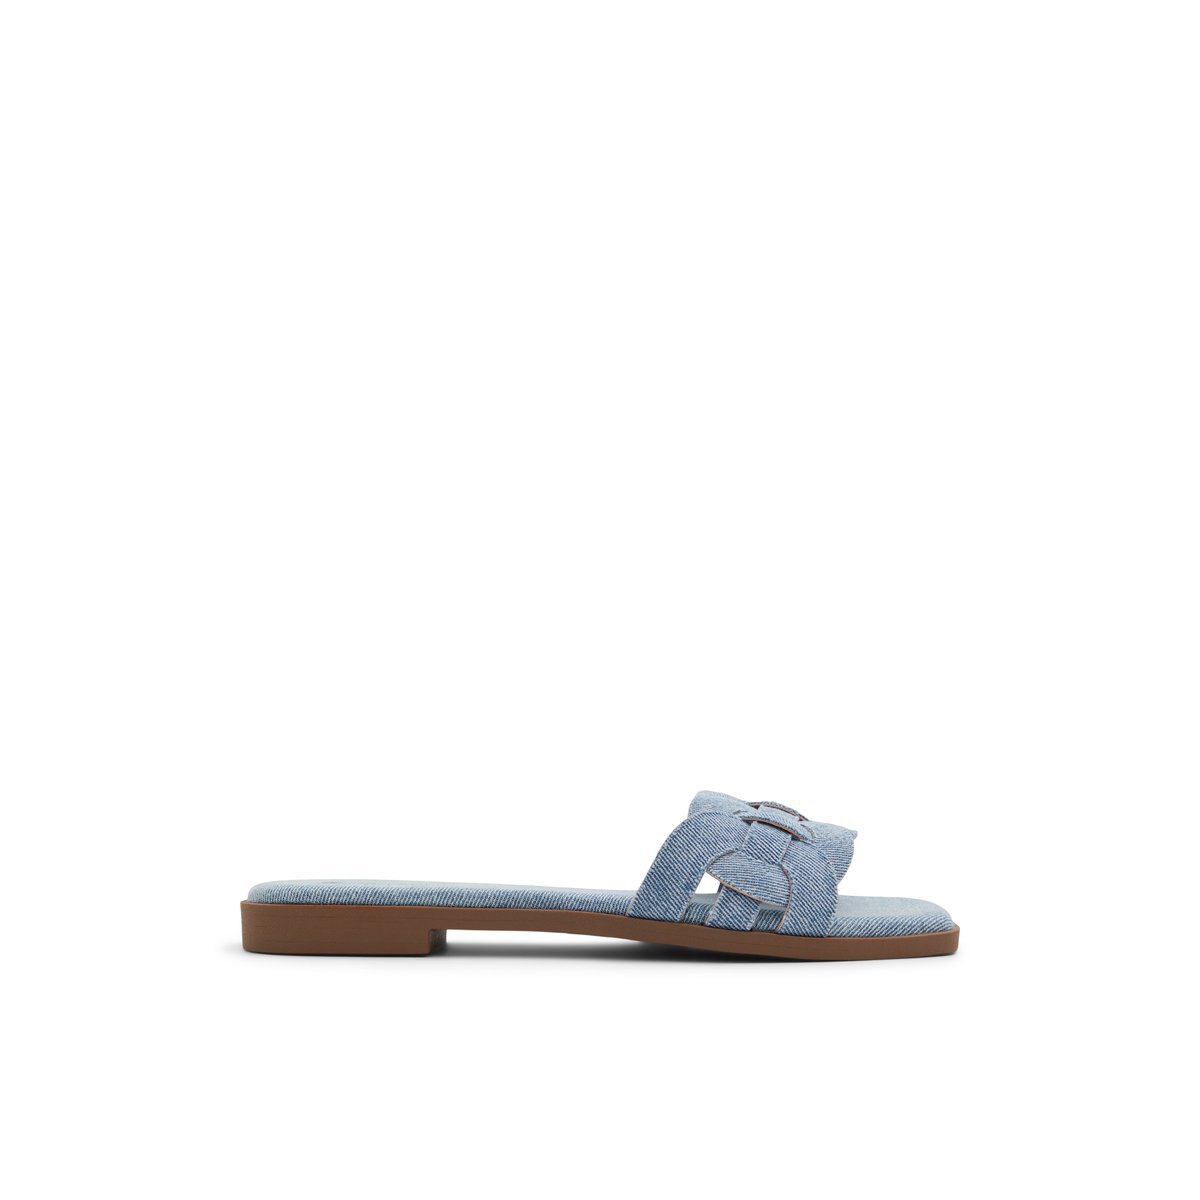 Buy Women Blue Sandals Online - 783274